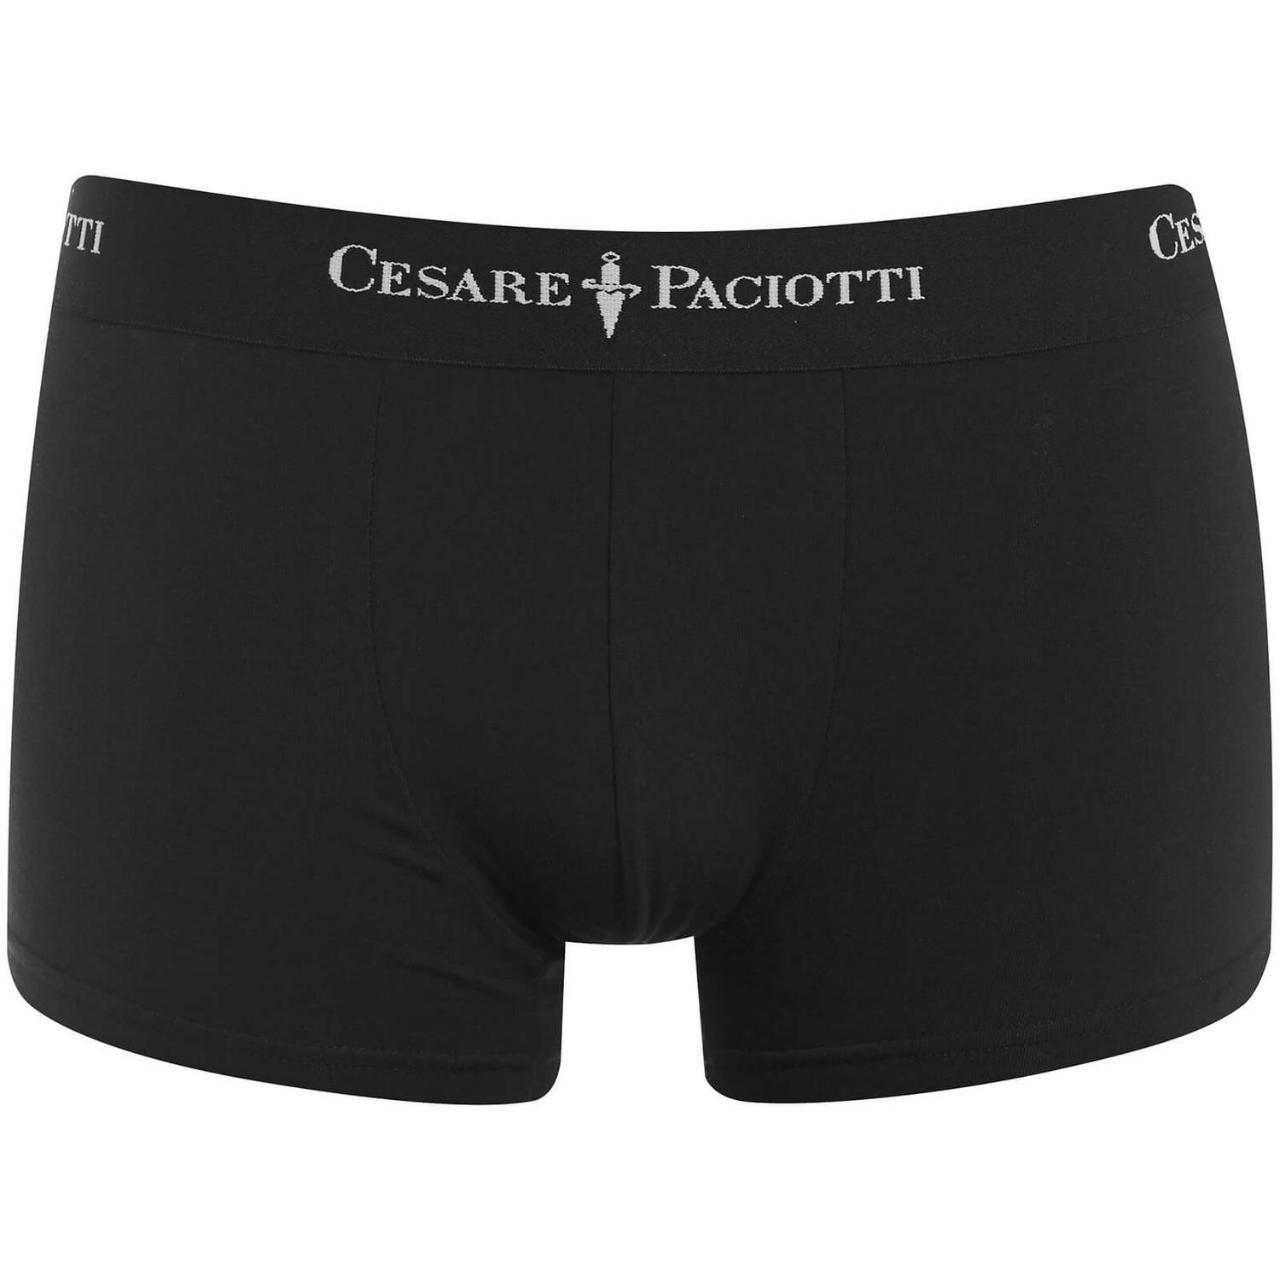 New Cesare Paciotti Black Logo Cotton Boxer... - Depop